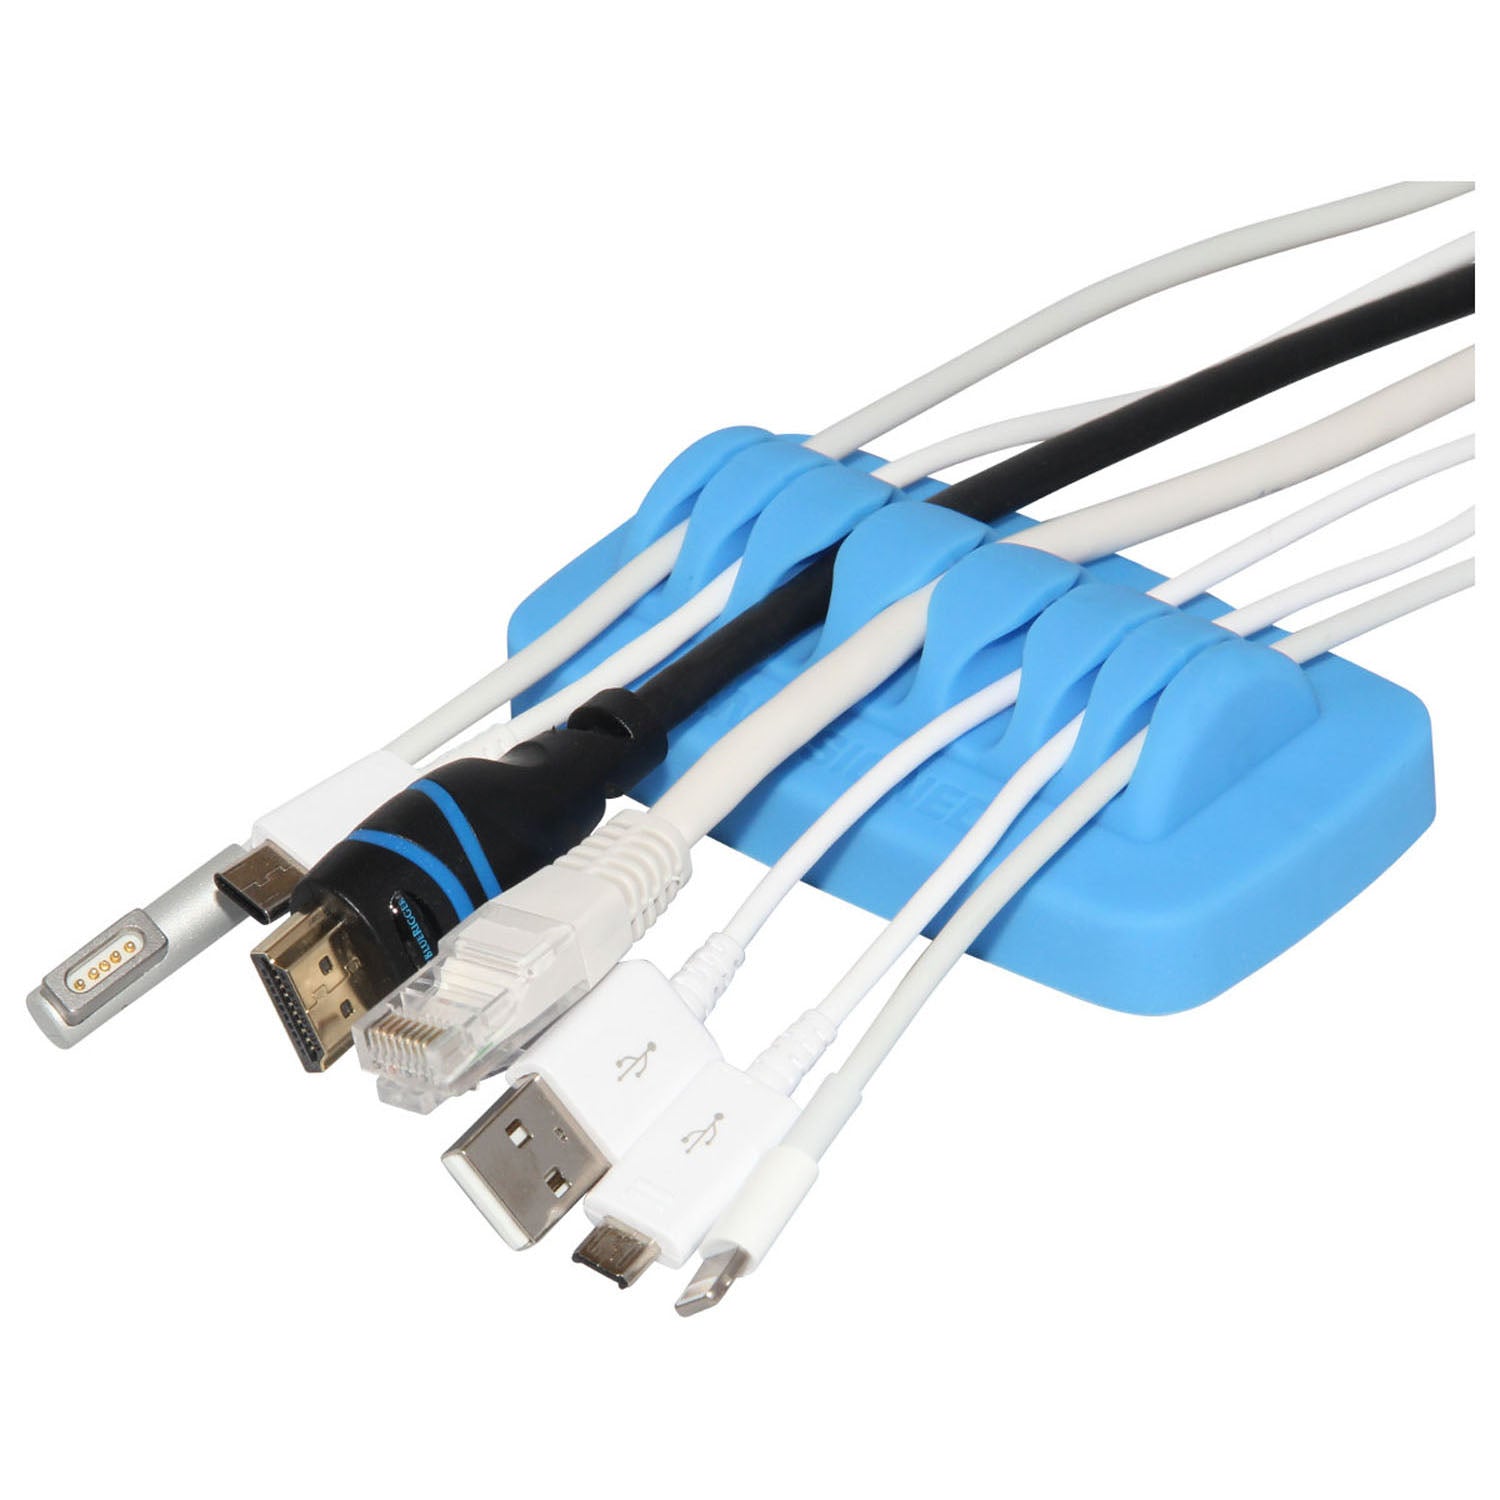 Fleming Supply 744890GJR Desktop Cable Organizer Management for 7 Wire